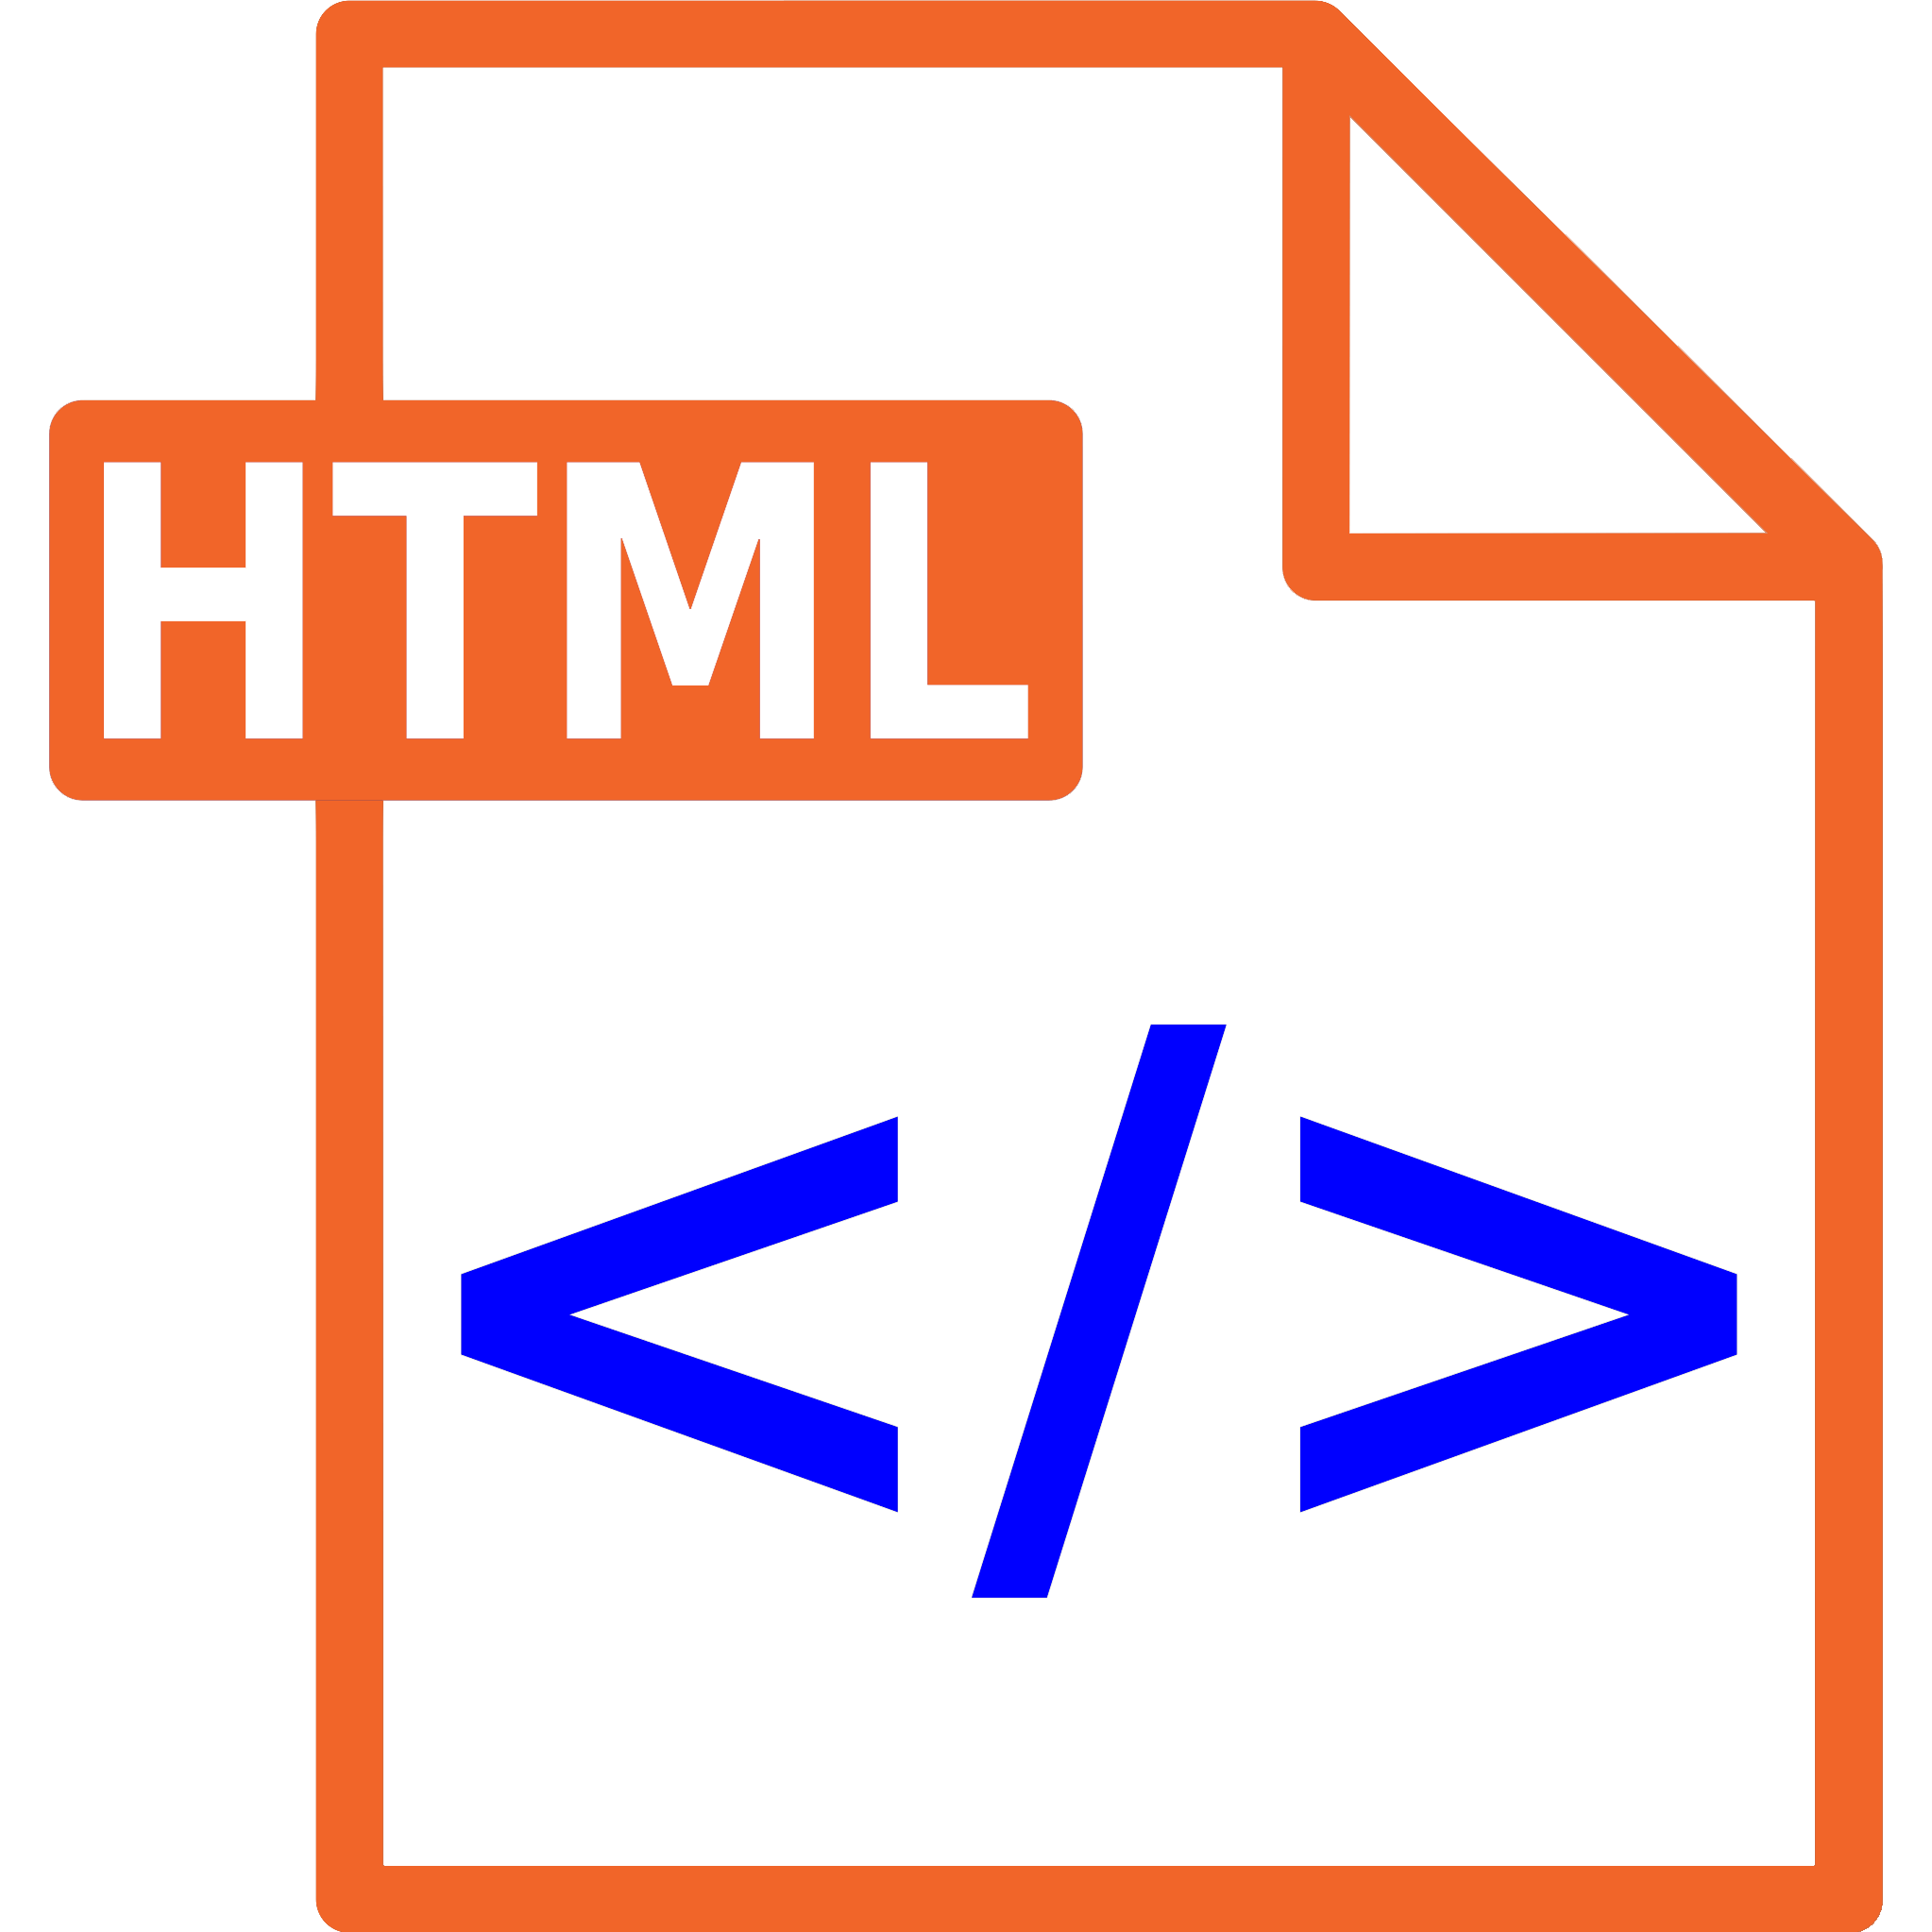 Название html тегов. Теги html. Изображение в html. Html рисунок. Базовые Теги html.